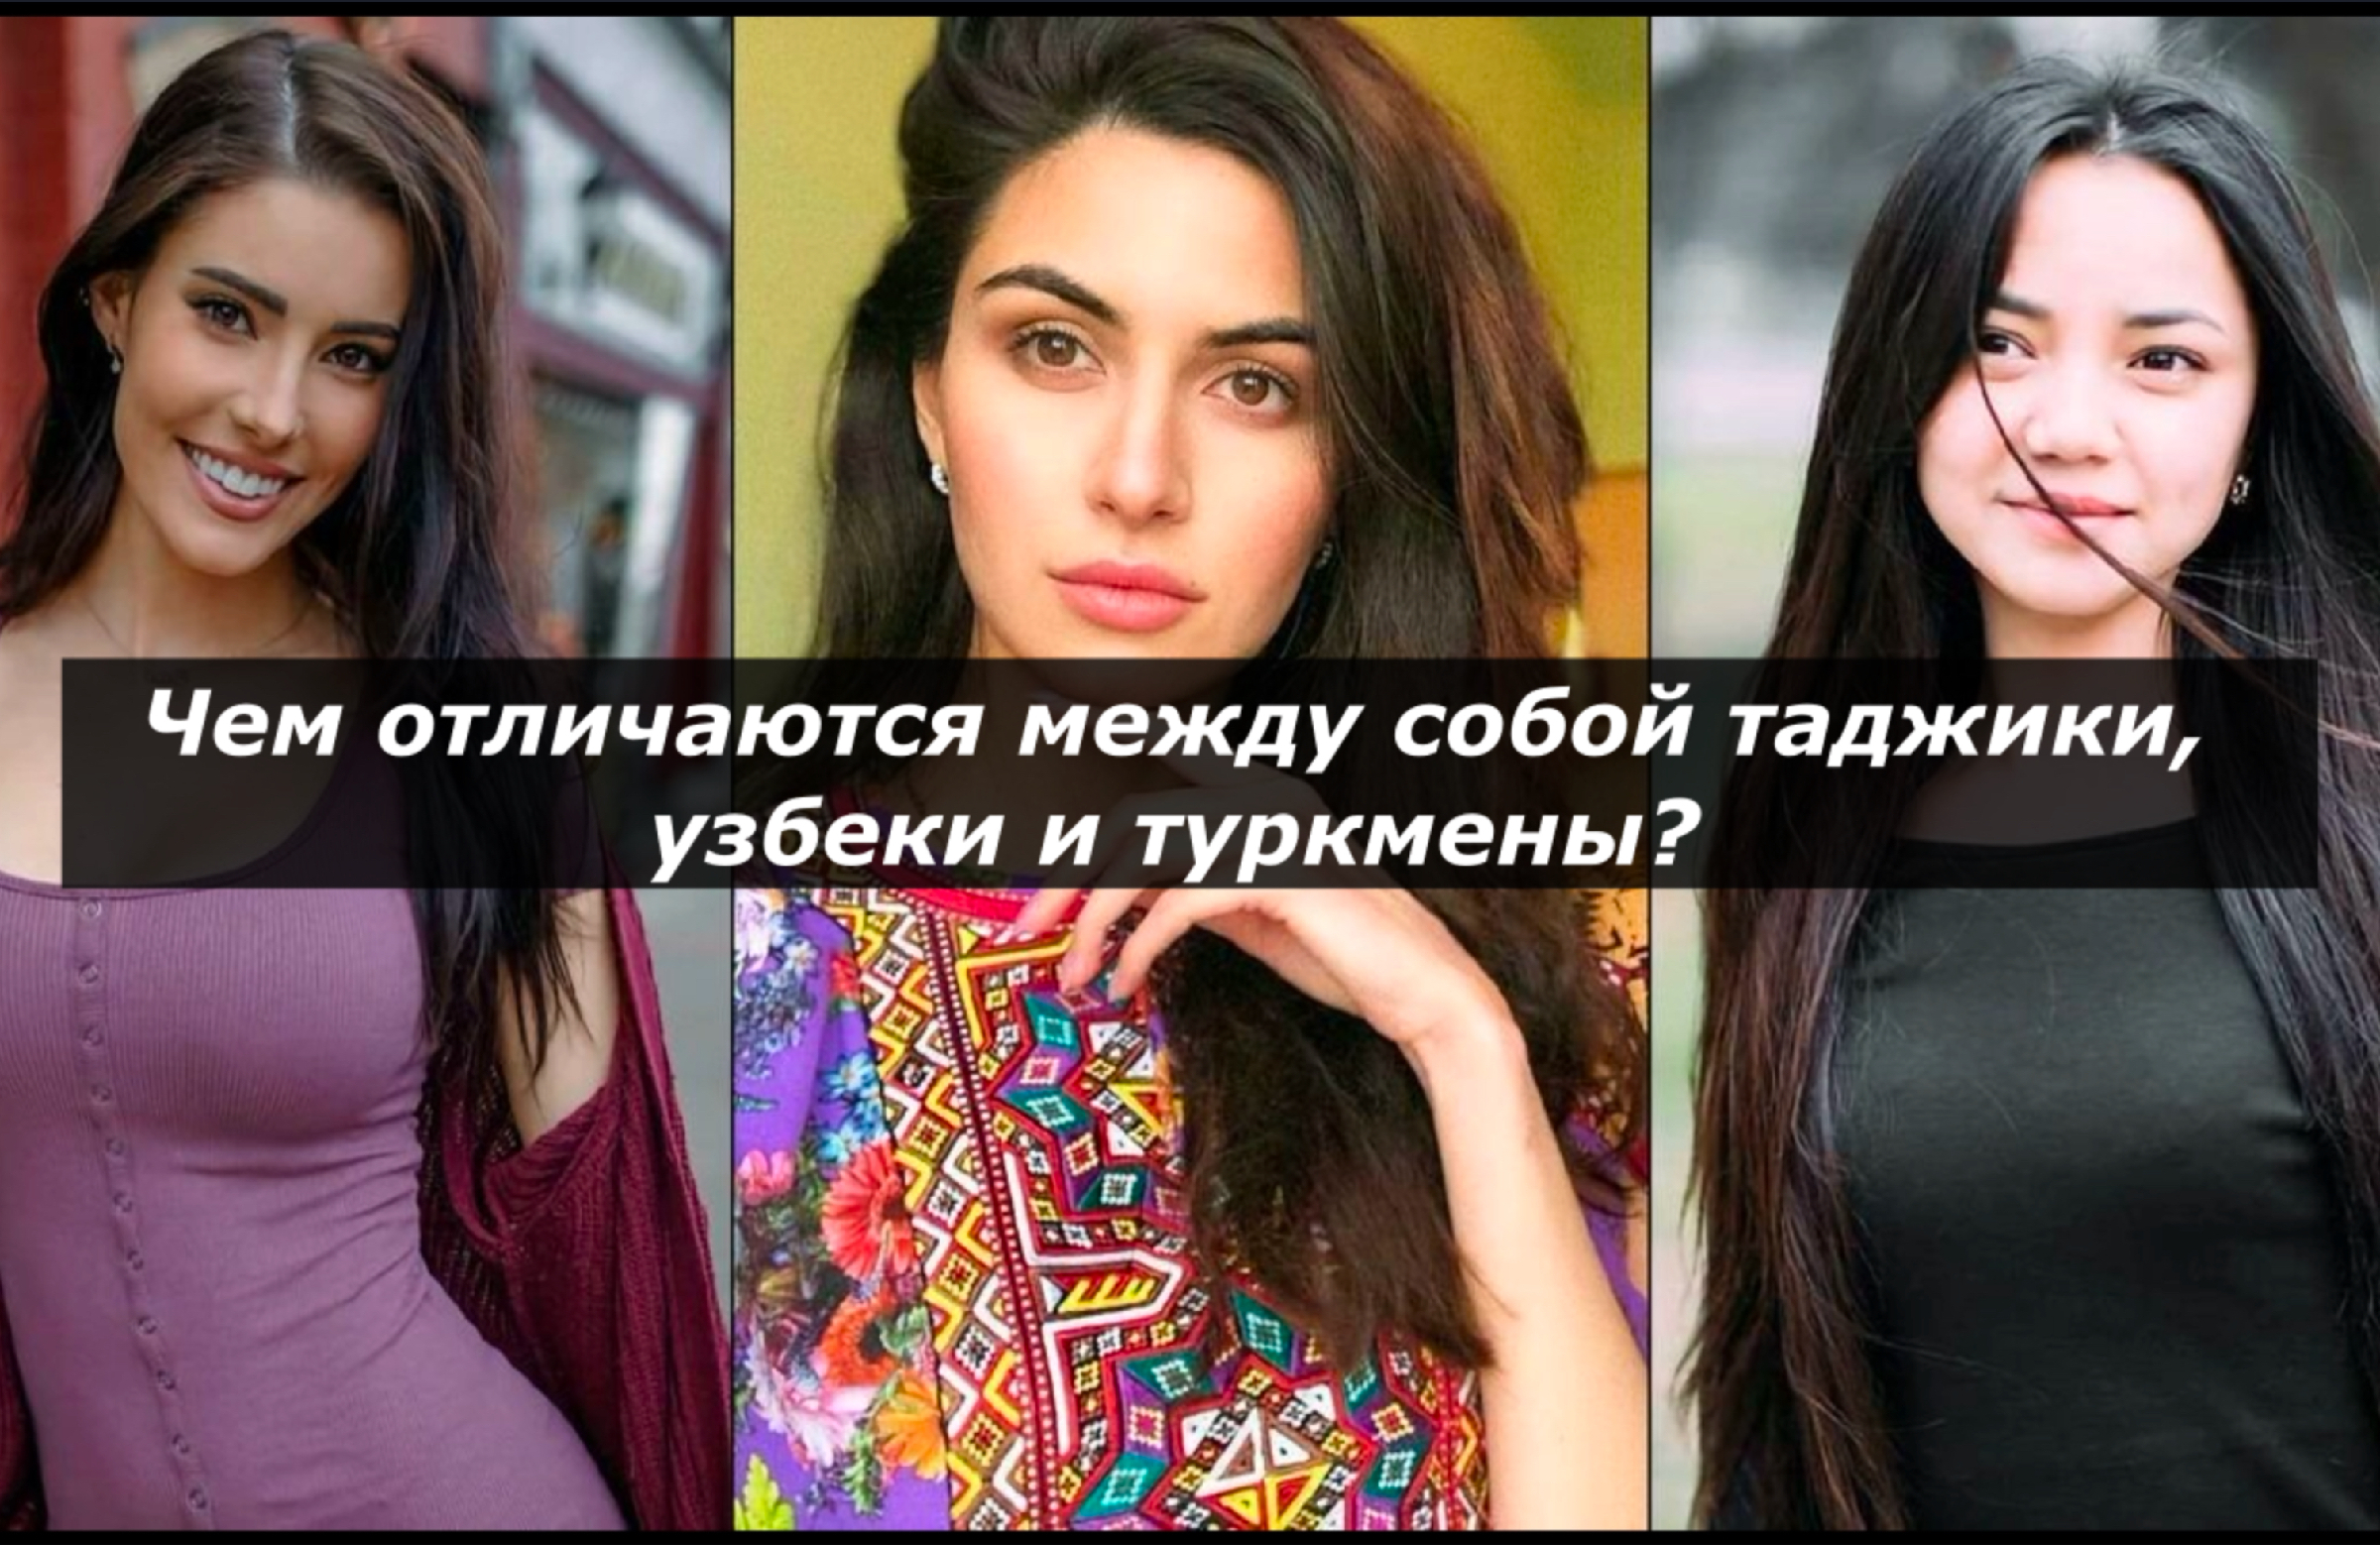 Отличие узбека от таджика. На кого похожи узбеки внешне. Таджик и узбек отличия внешне фото. Как отличить таджика от узбека по внешности. Как таджика отличить от узбека по внешности